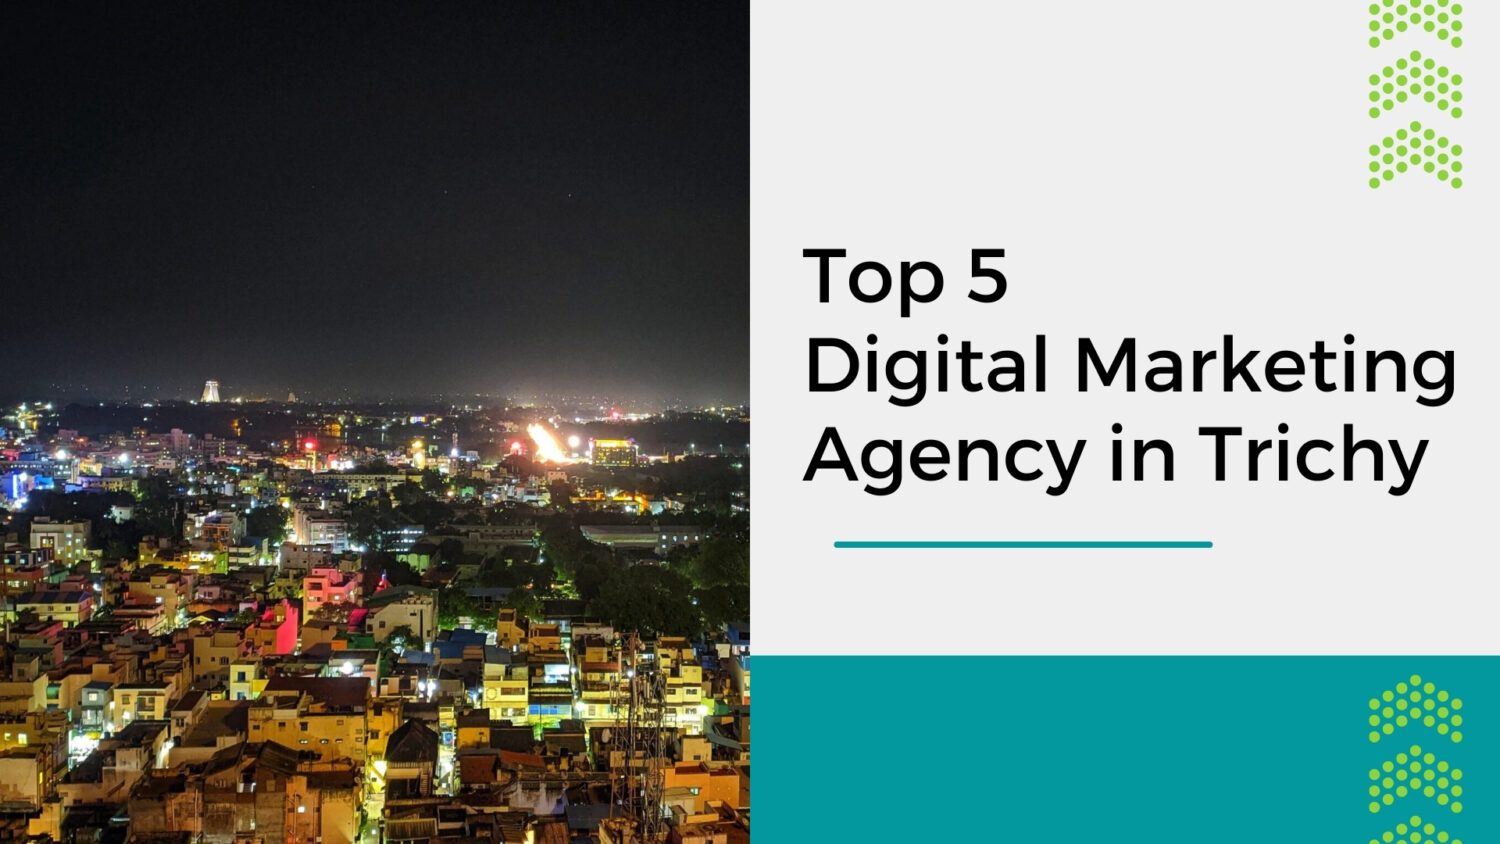 Top 5 digital marketing agency in Trichy